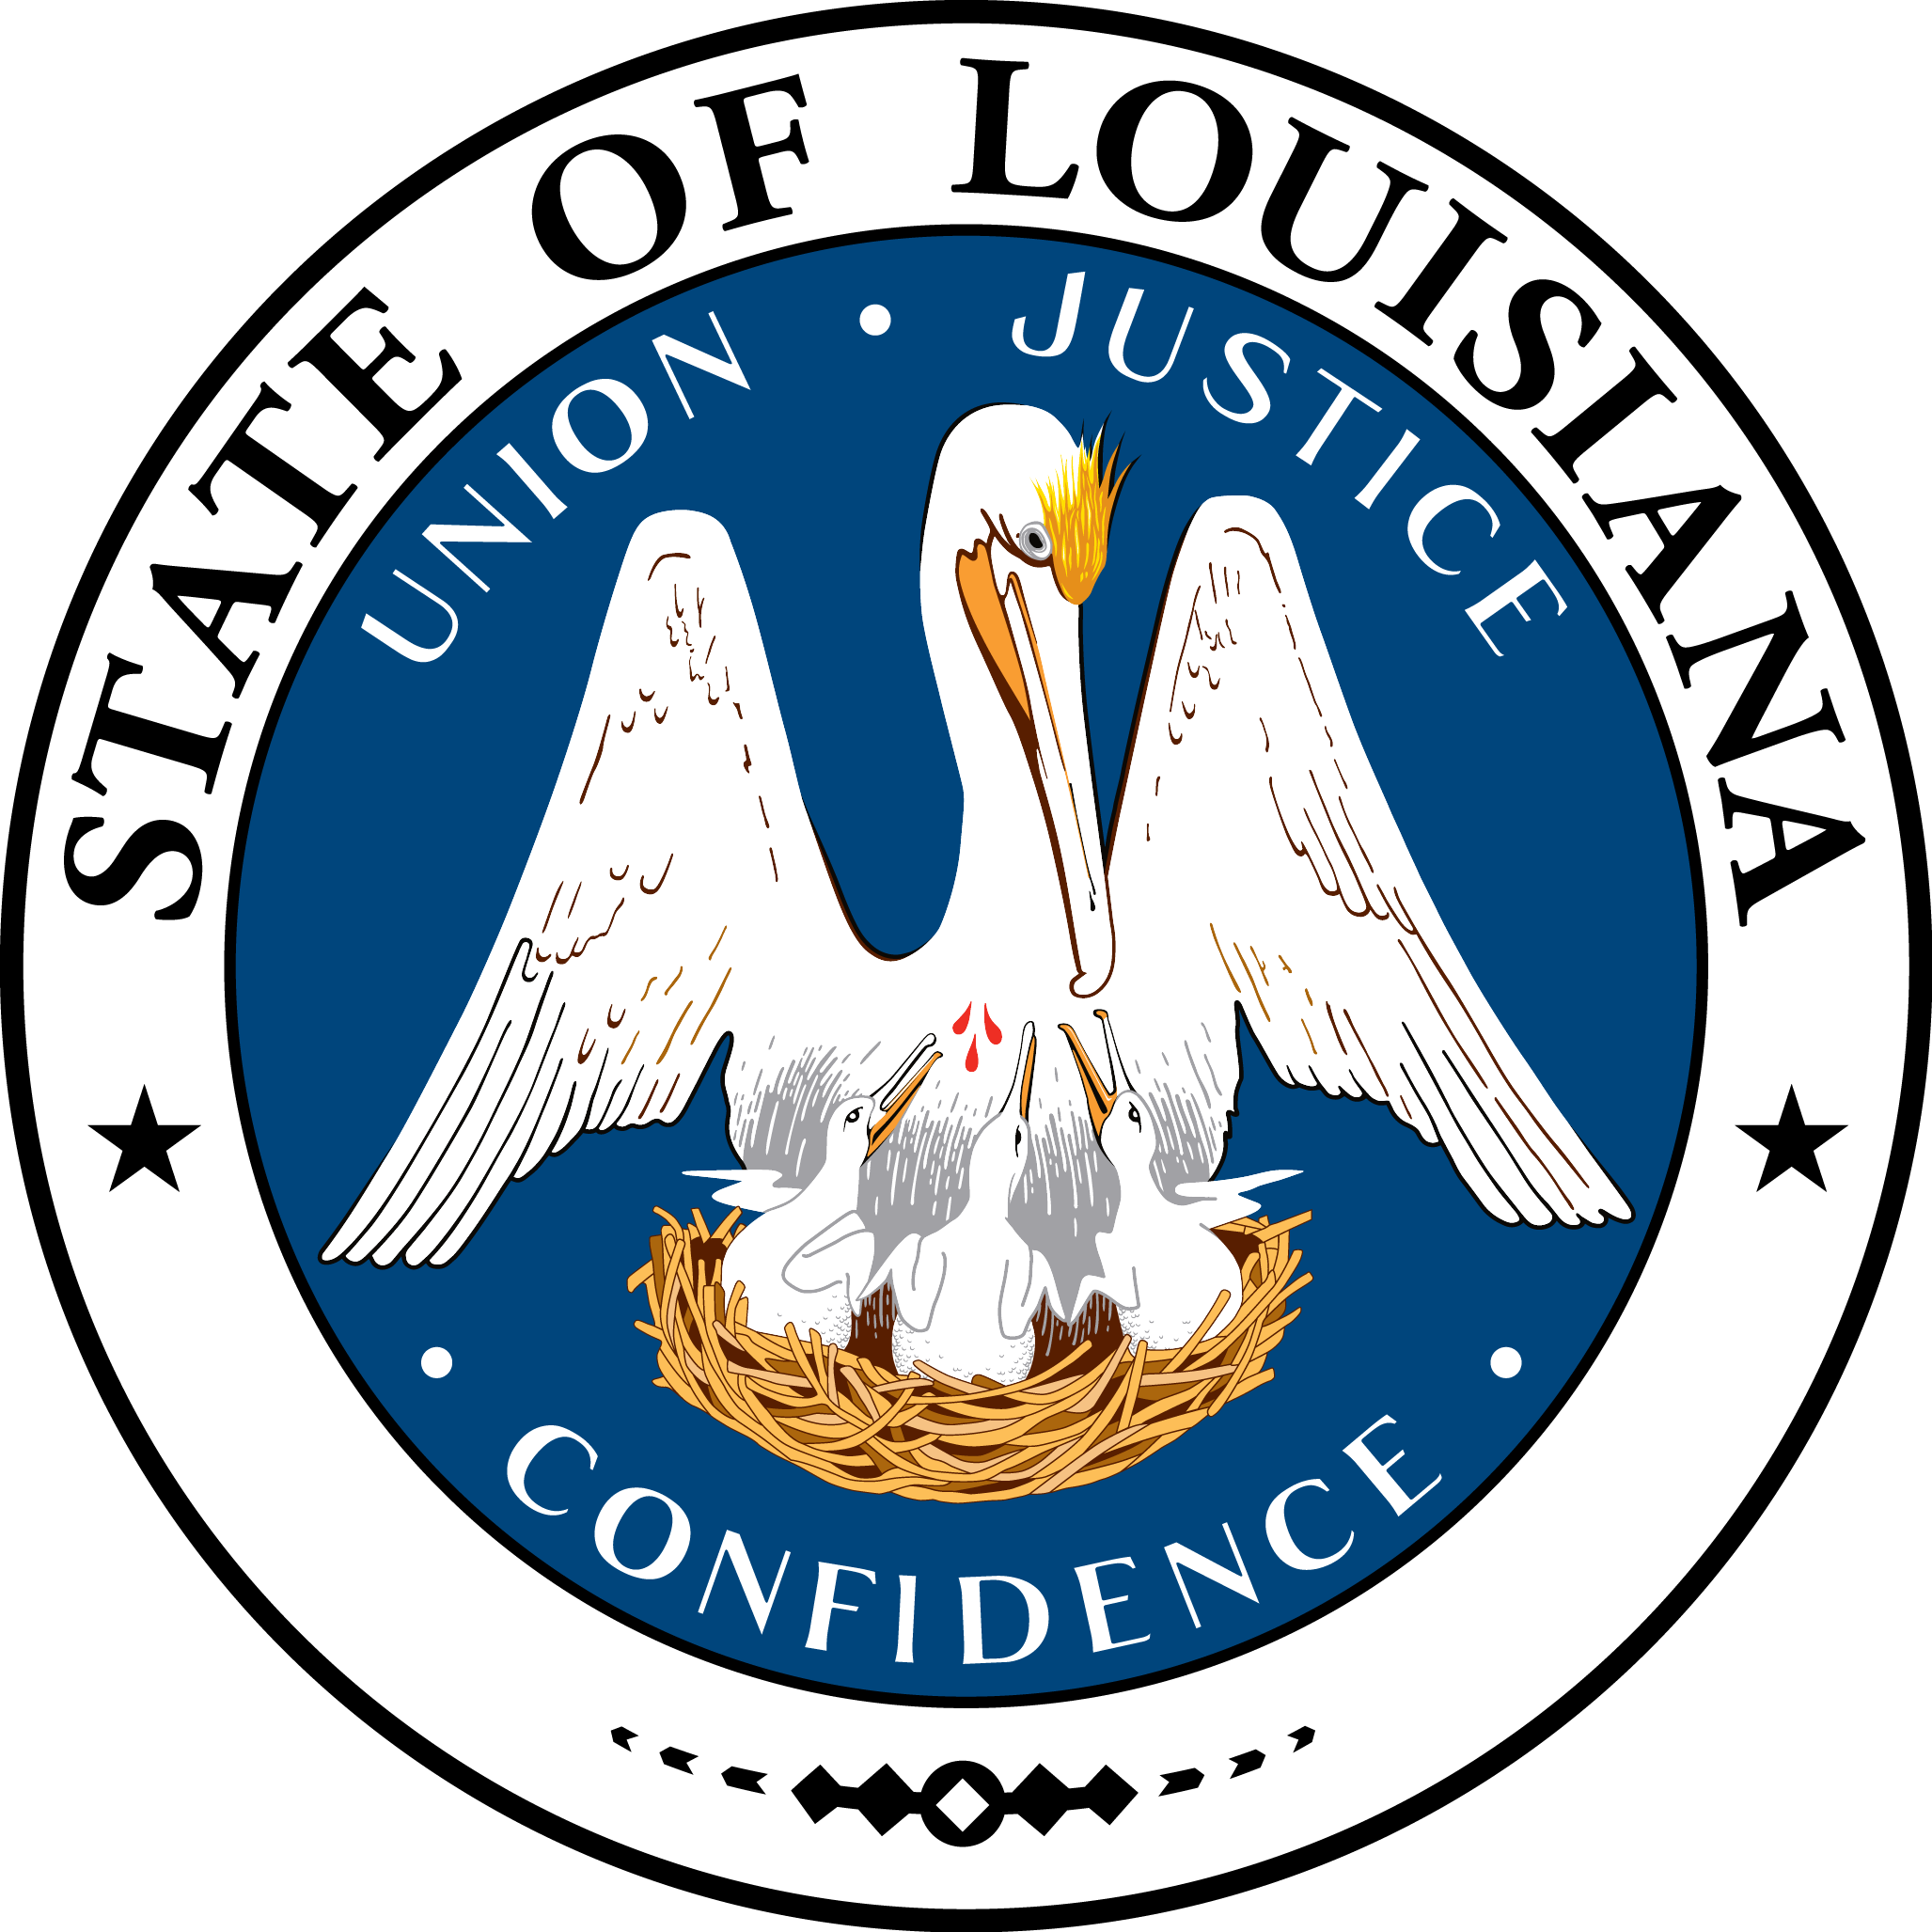 Louisiana state seal